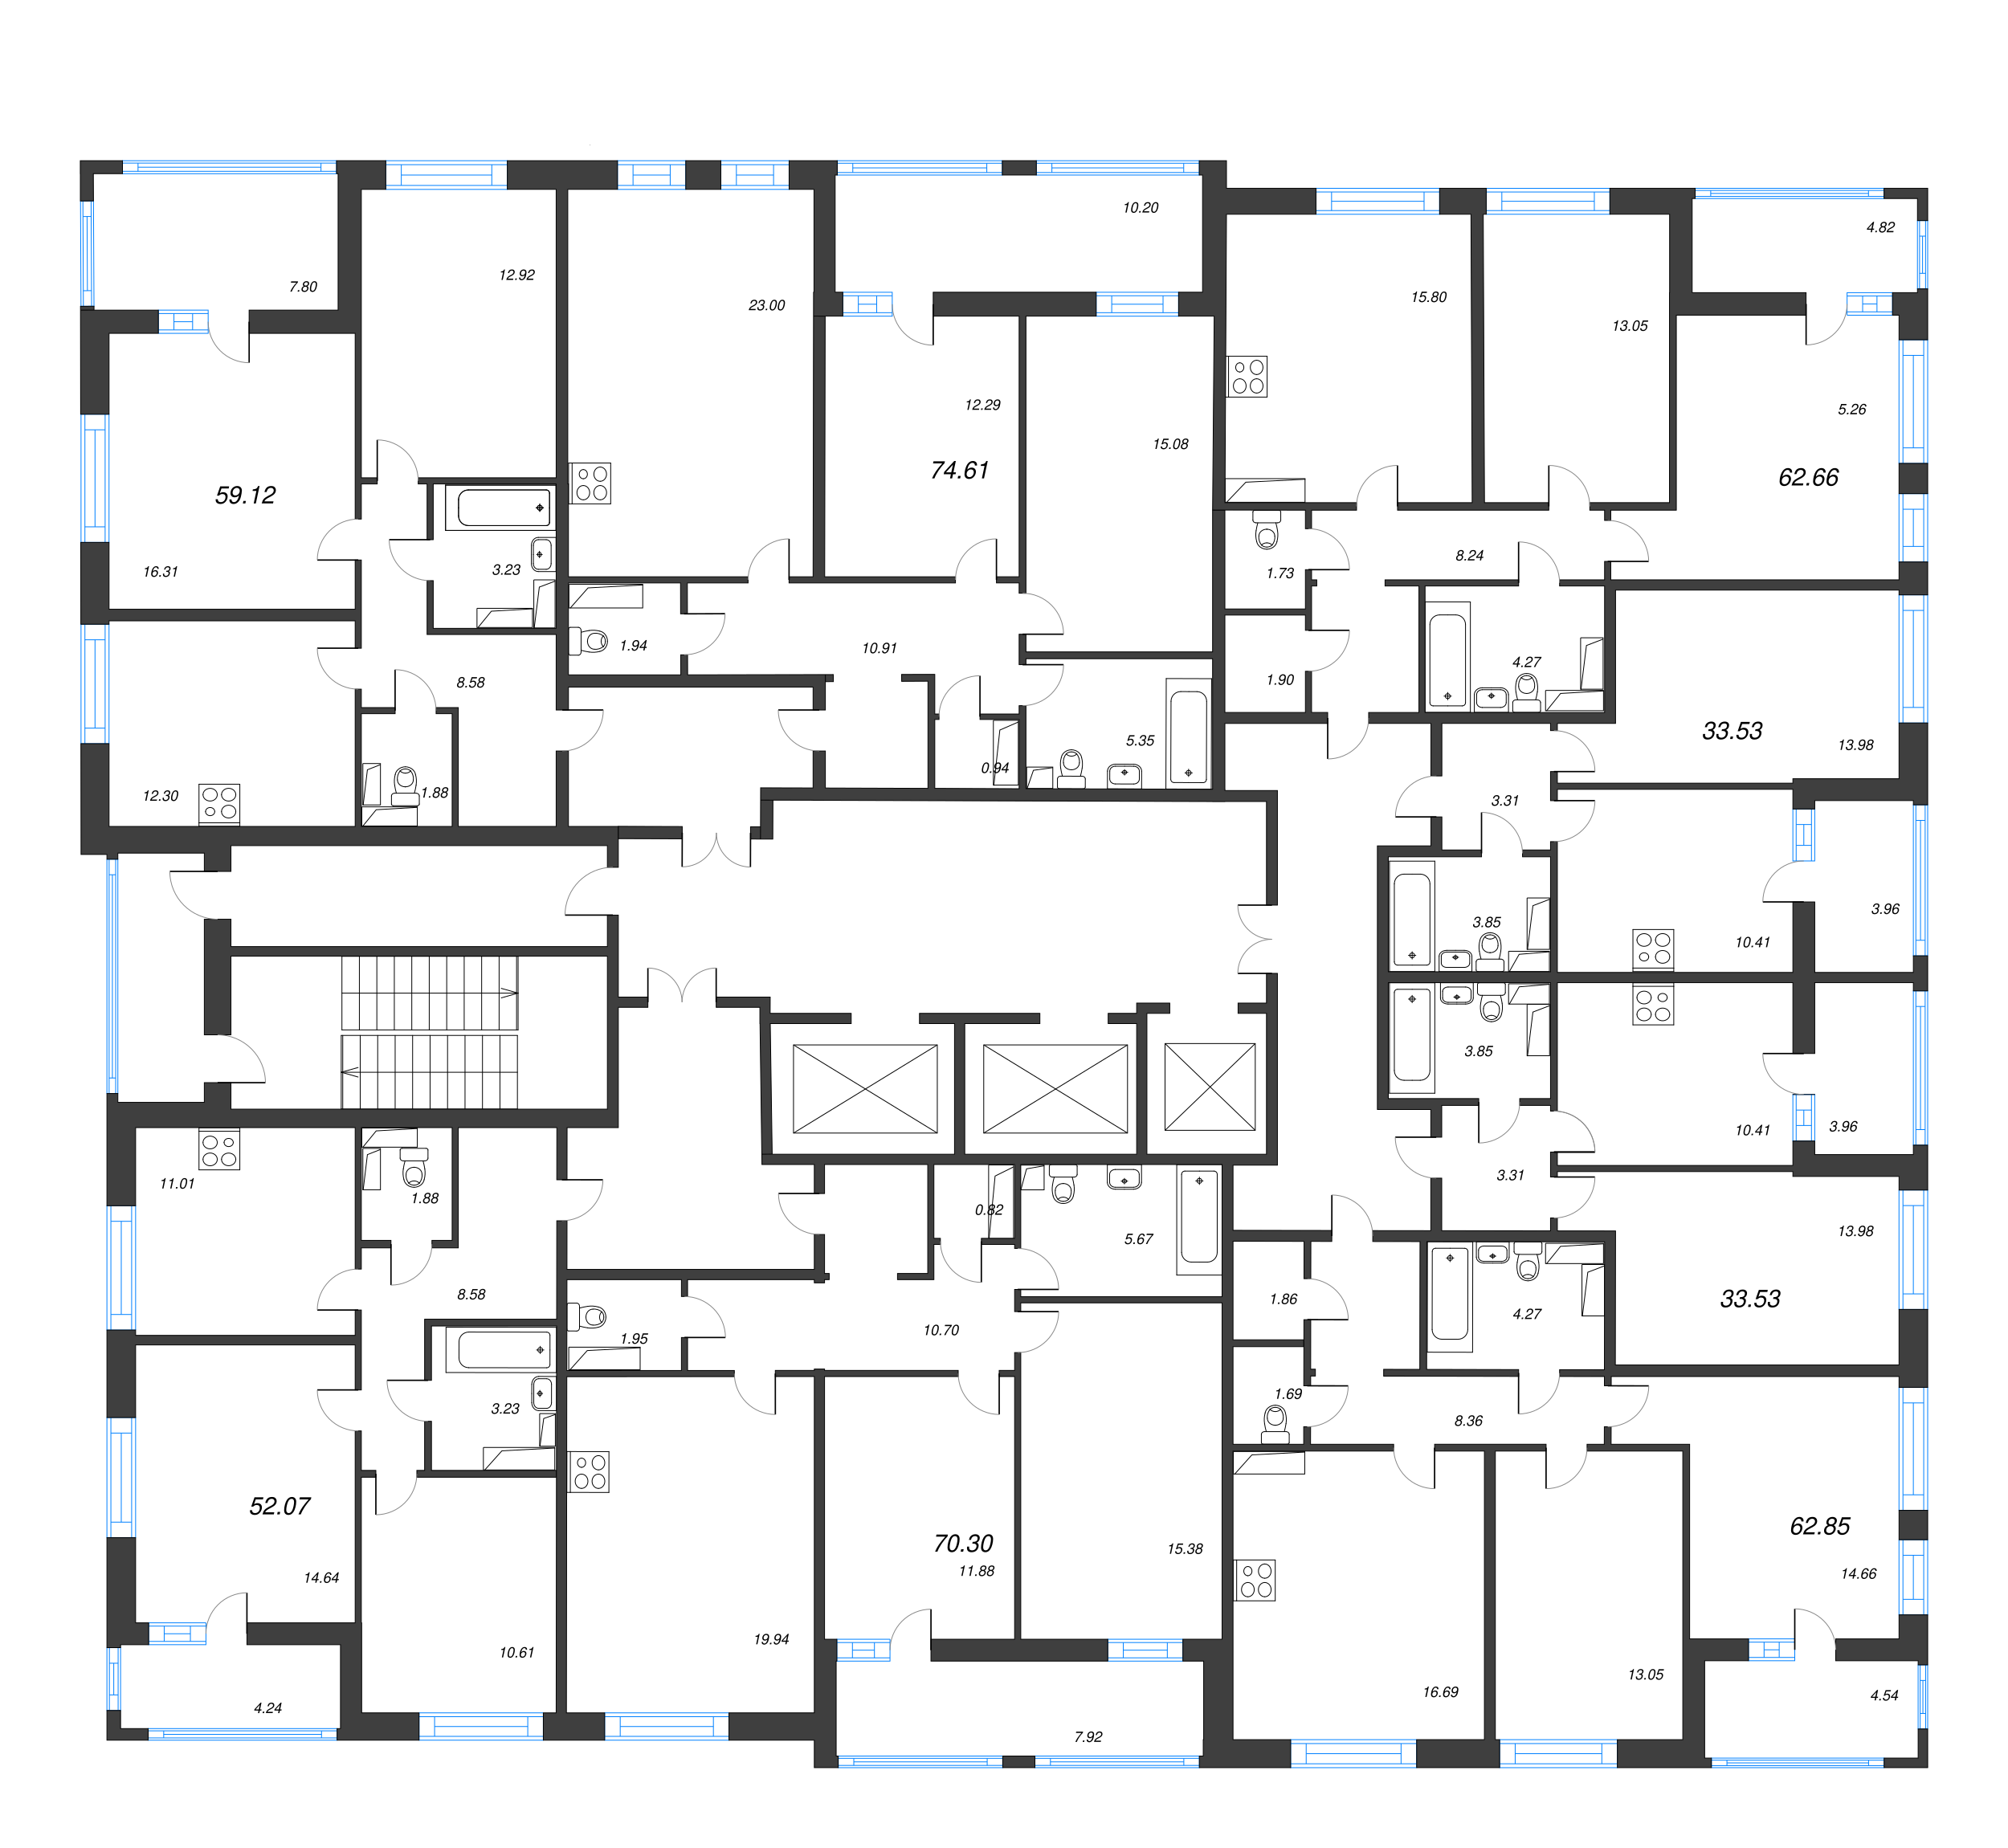 3-комнатная (Евро) квартира, 62.85 м² - планировка этажа